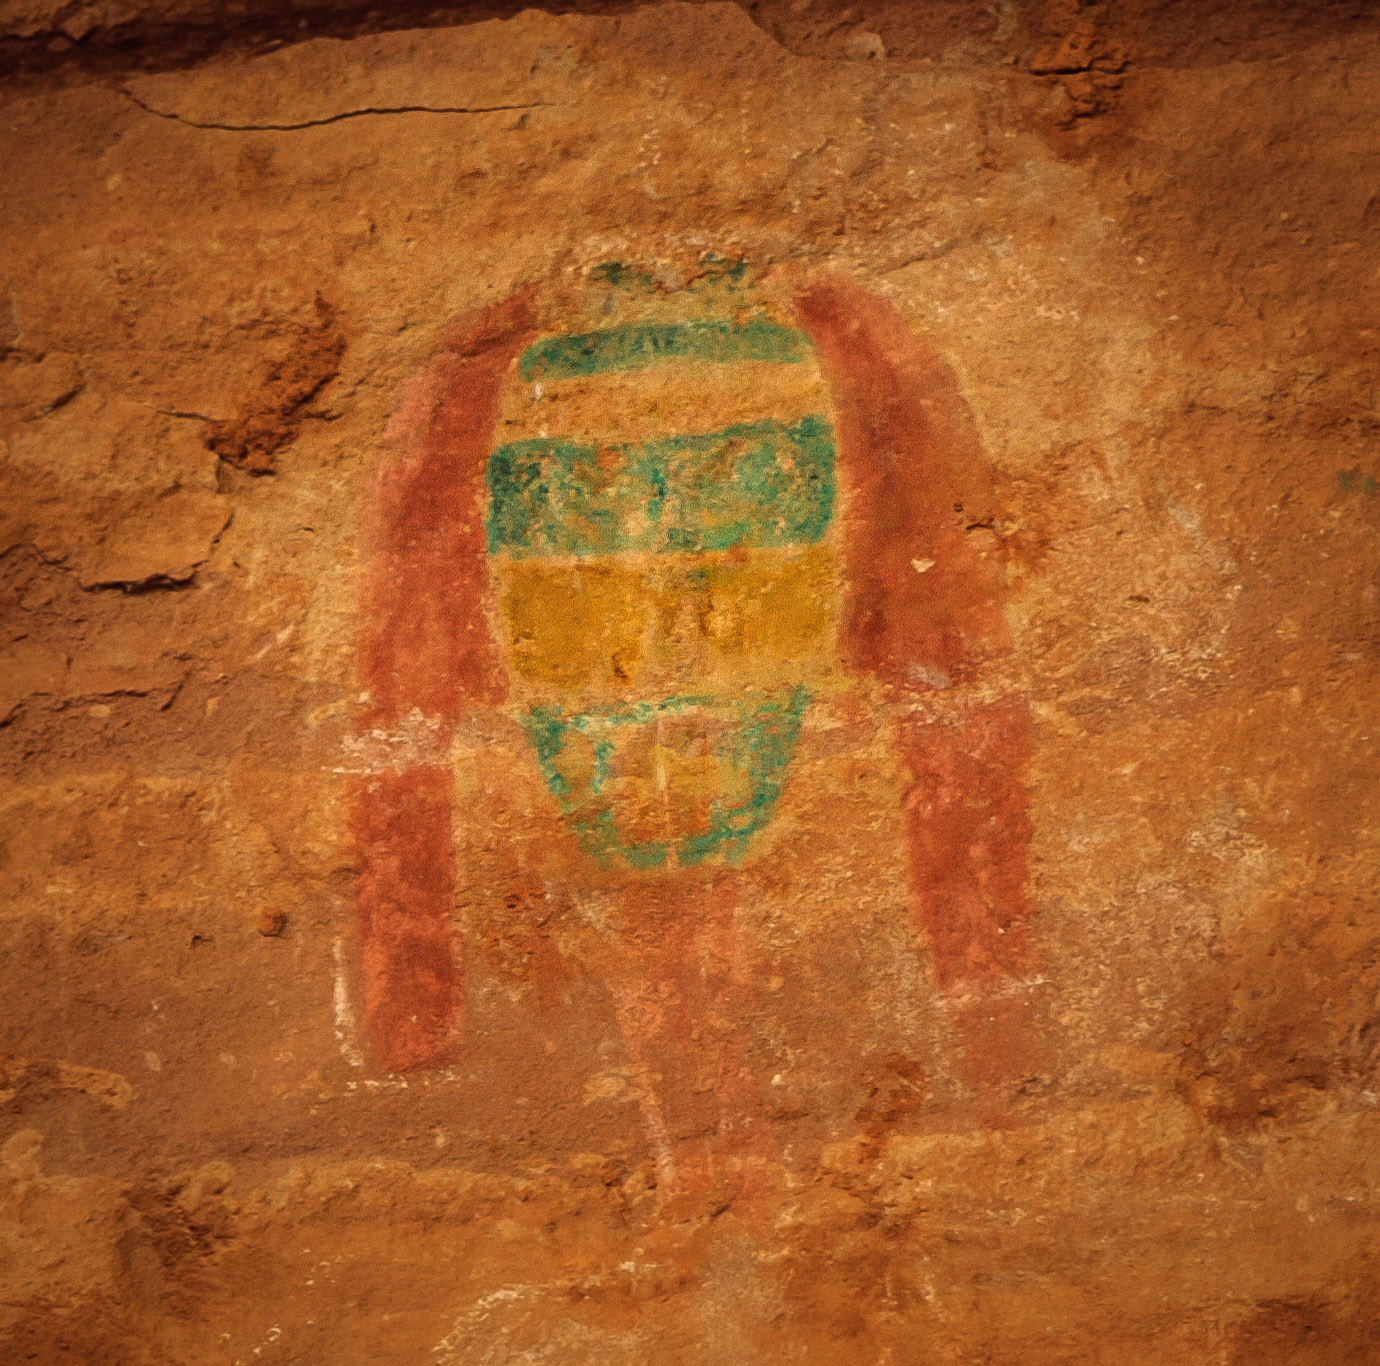 The Green Mask pictograph at Green Mask Ruins, Shriek's Canyon